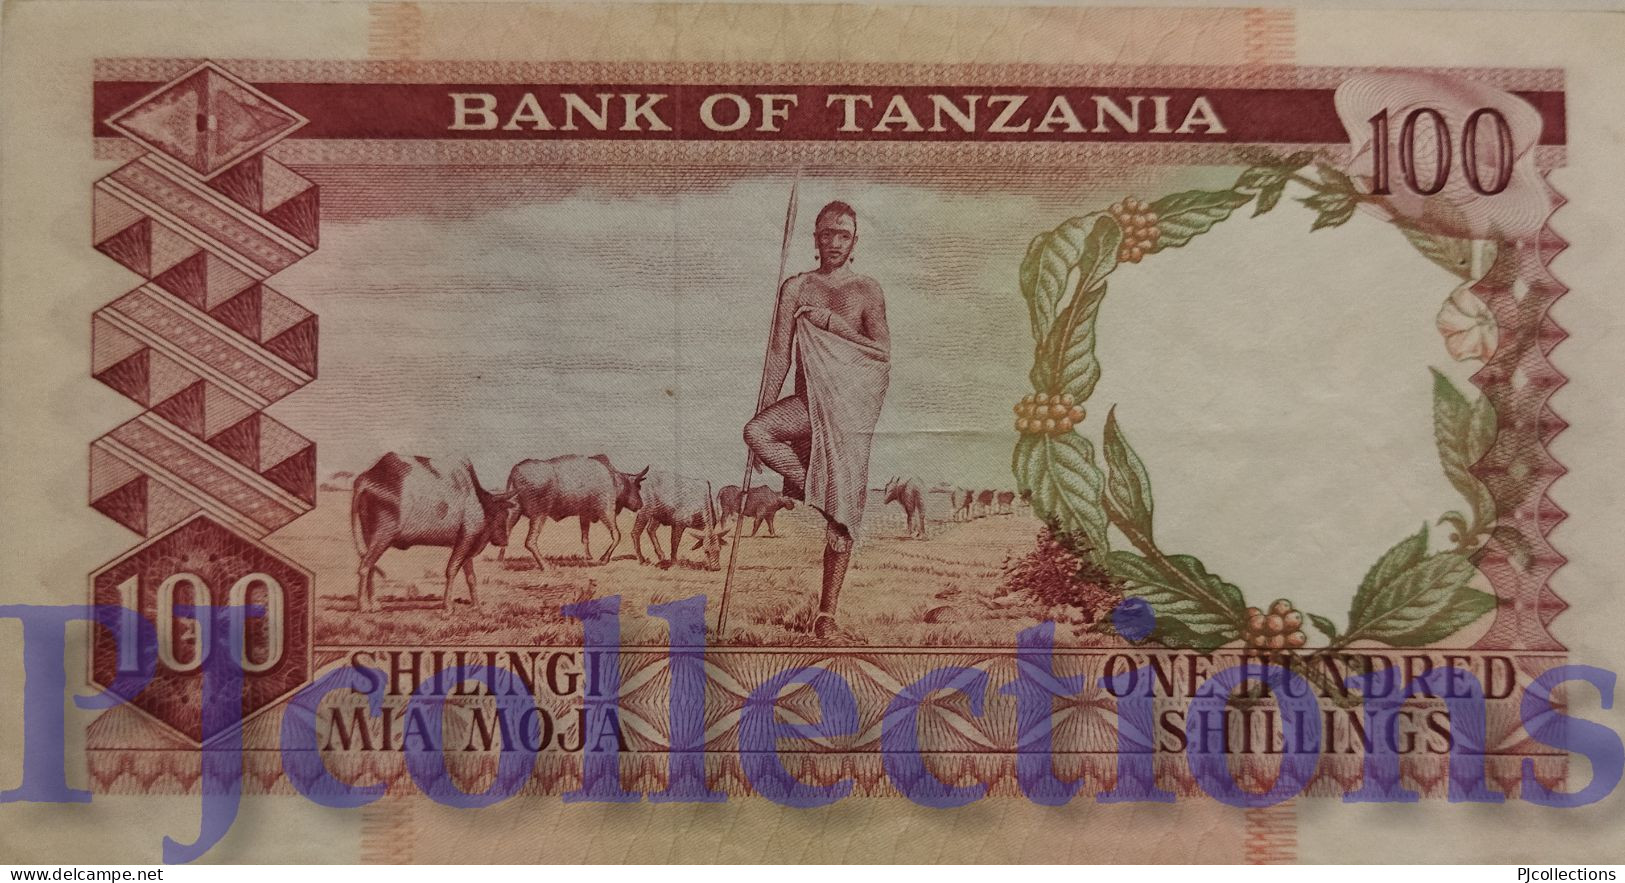 TANZANIA 100 SHILINGI 1966 PICK 4 AU PREFIX "A" W/PIN HOLES RARE - Tanzania